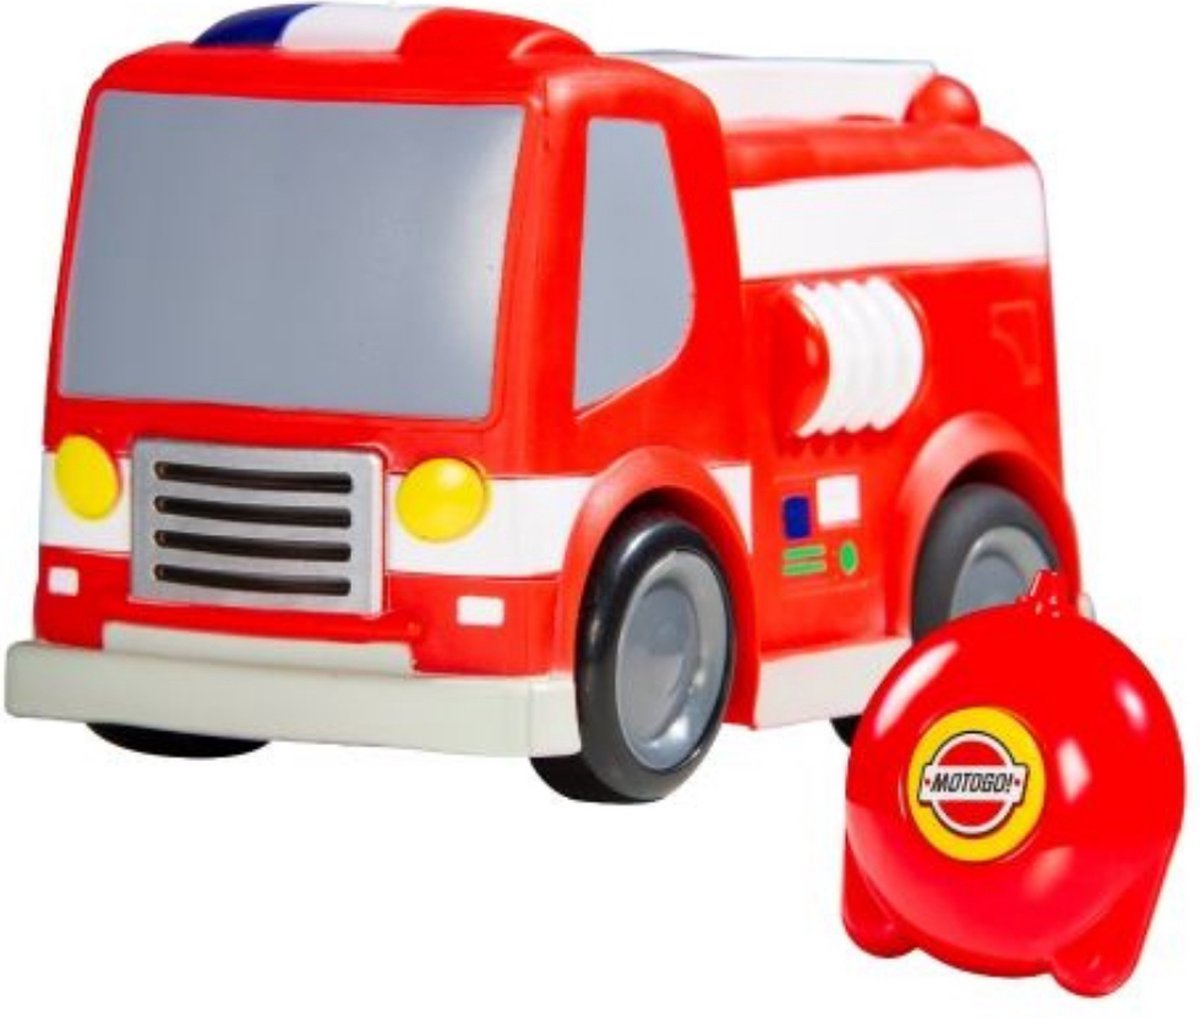 Imaginarium My First RC Auto Brandweer - Afstandsbestuurbare Brandweerauto - Met Eenvoudige Bediening